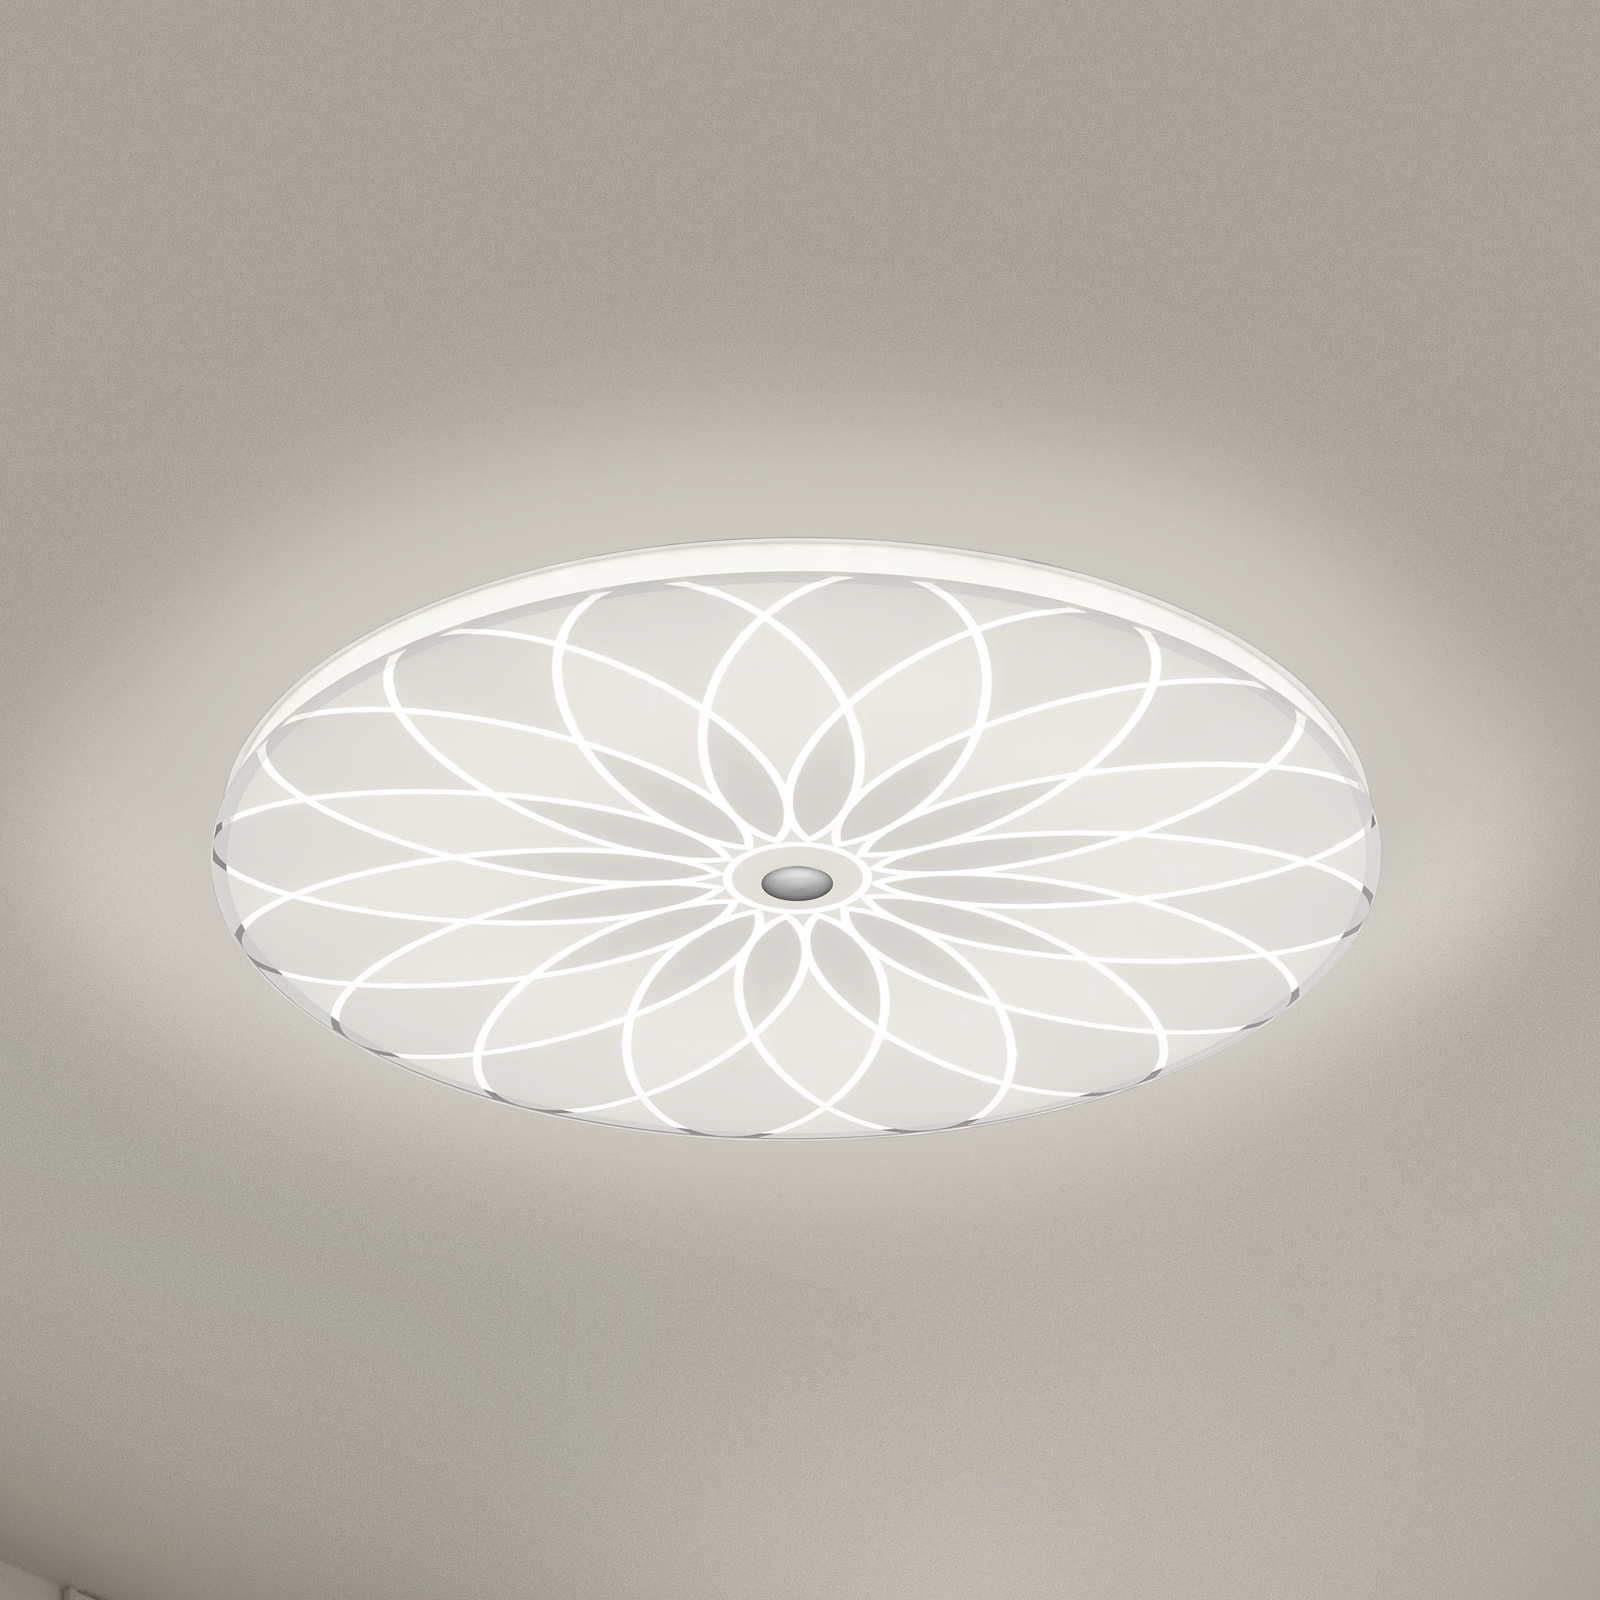 BANKAMP Mandala LED-Deckenleuchte Blume, Ø 42 cm